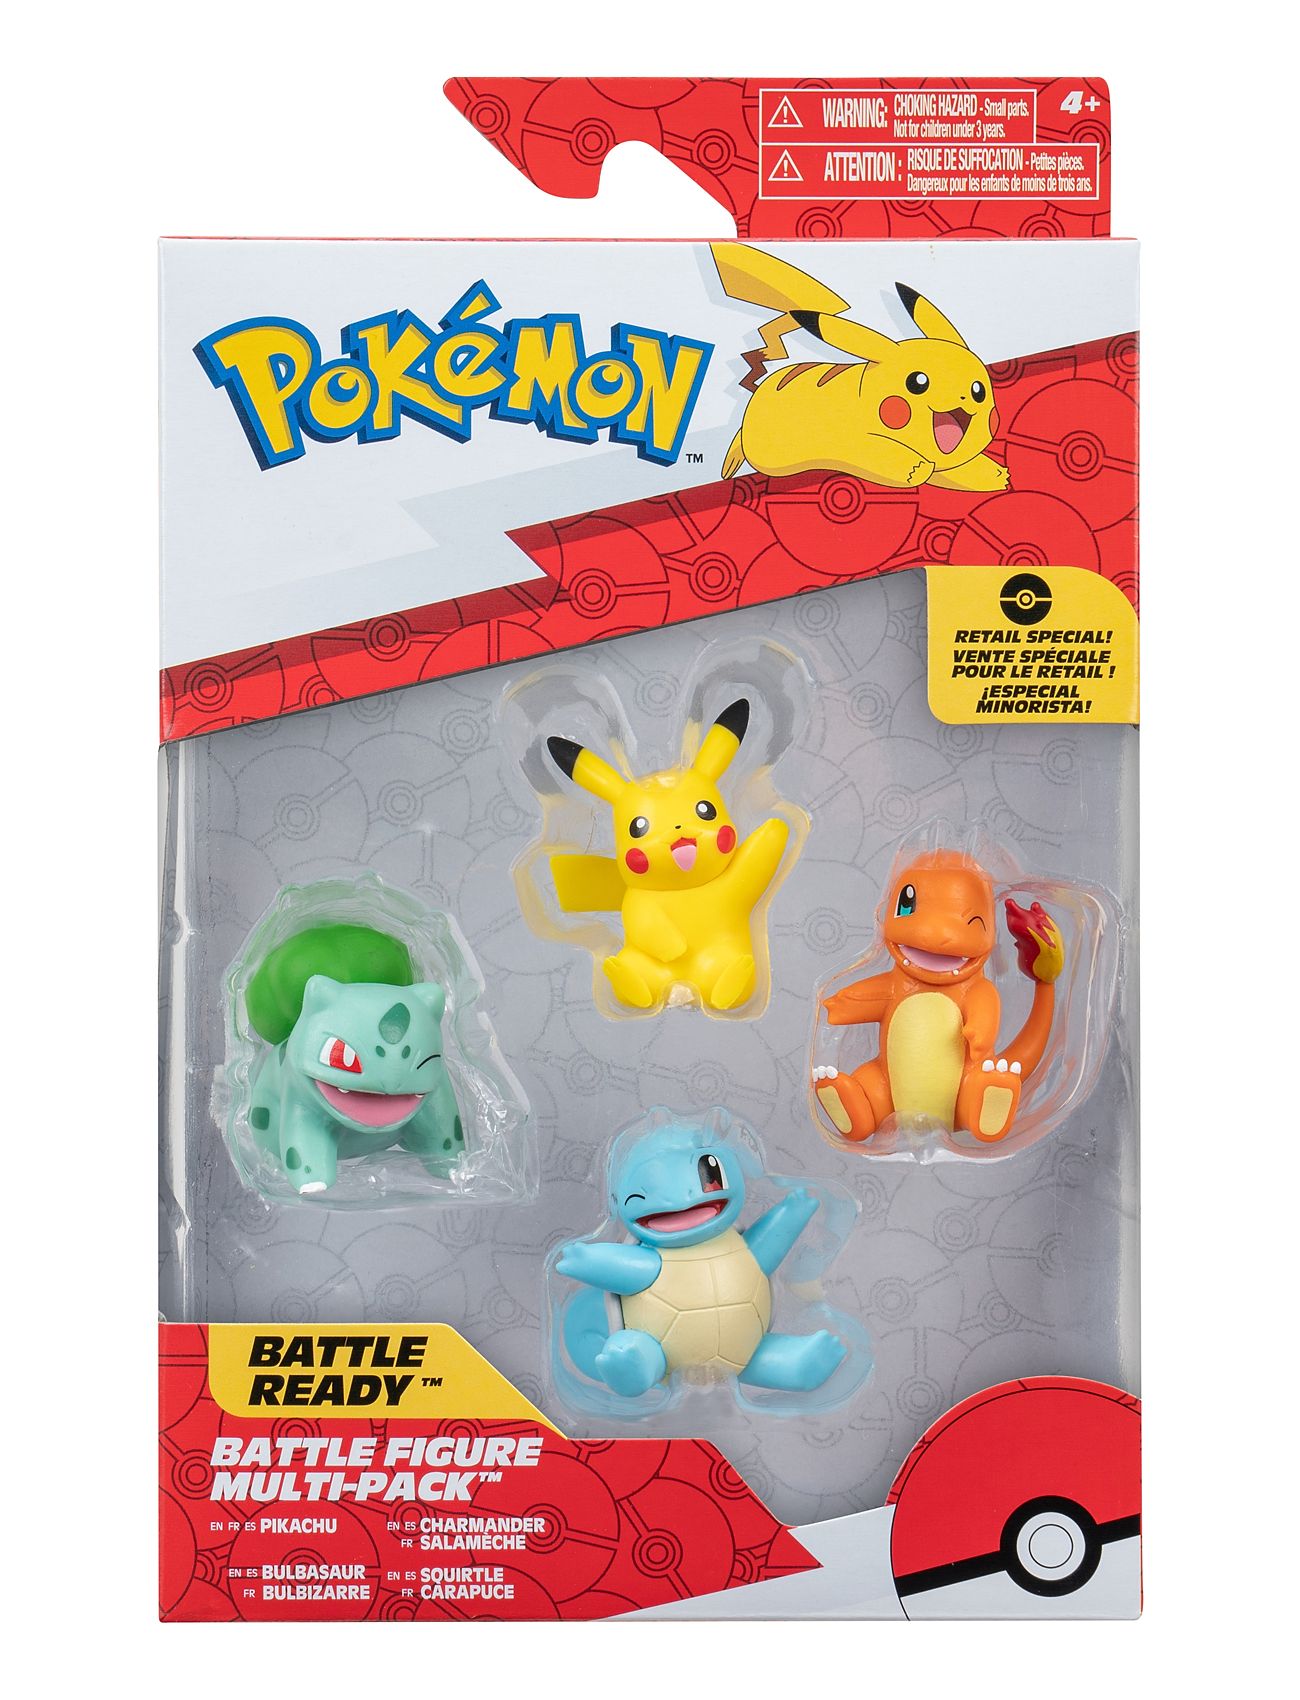 Pokemon Battle Figure 4 Pk Toys Playsets & Action Figures Action Figures Multi/patterned Pokemon